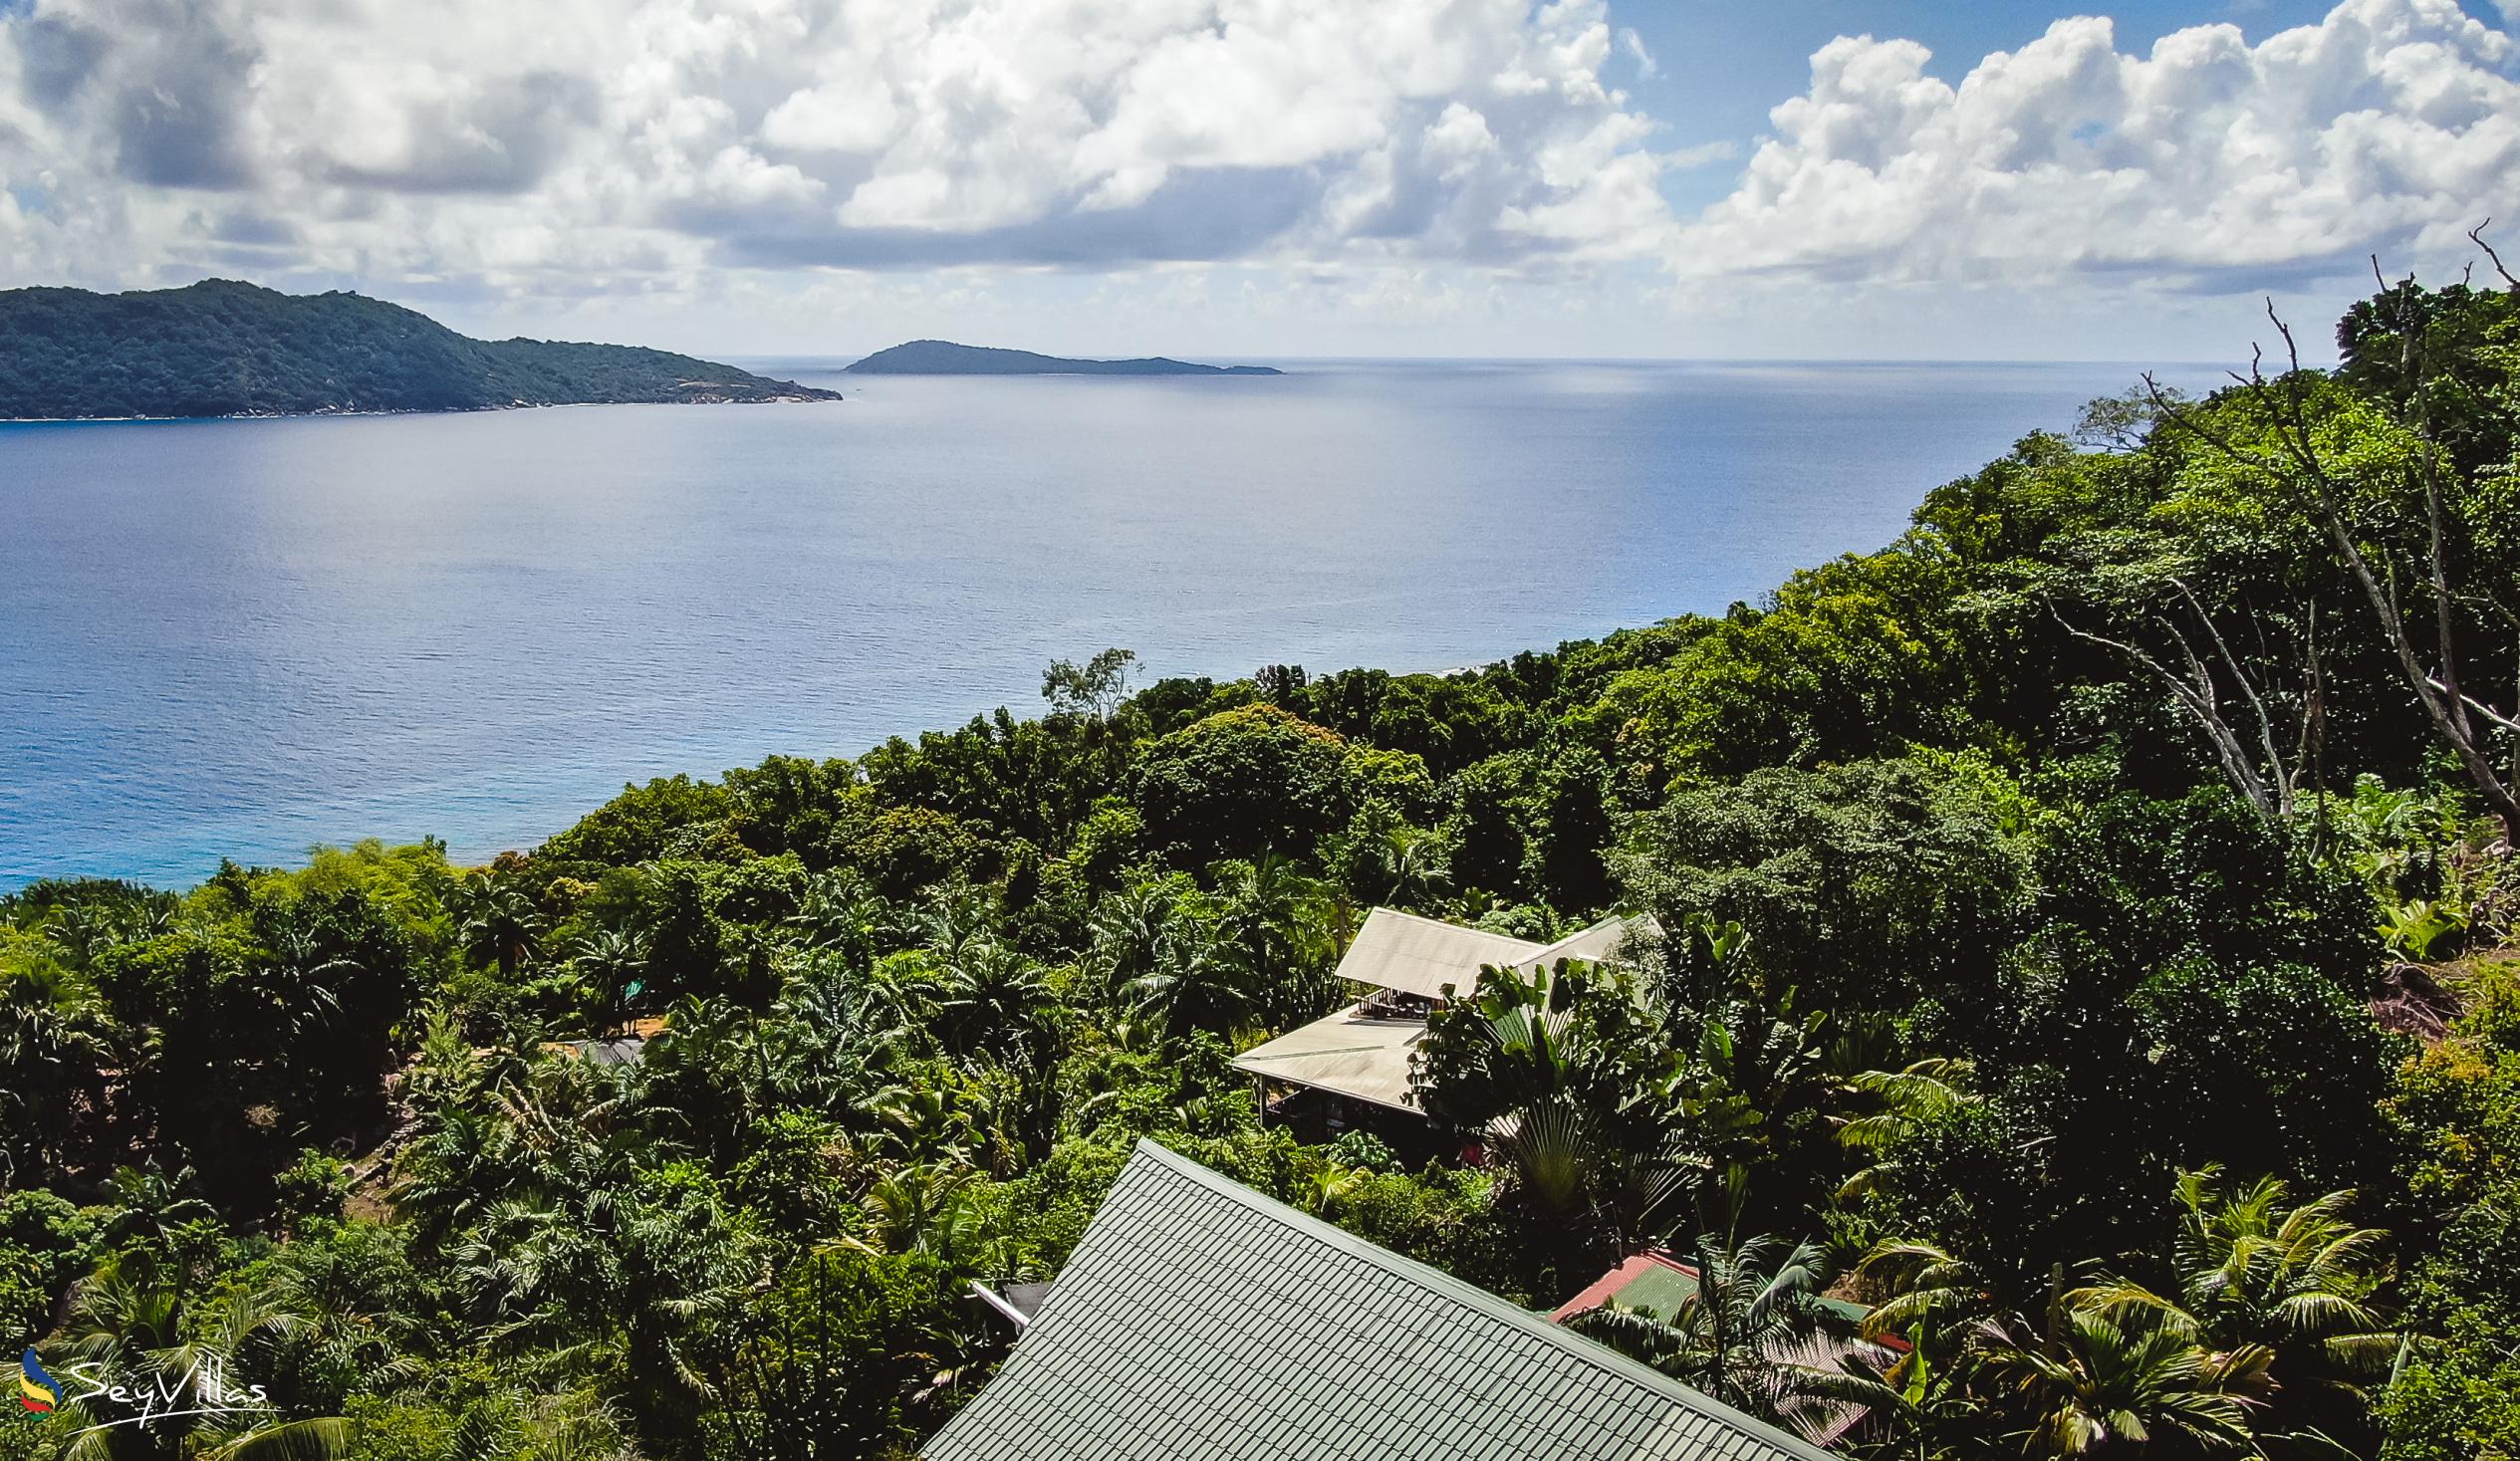 Photo 2: Secret Villa - Outdoor area - La Digue (Seychelles)